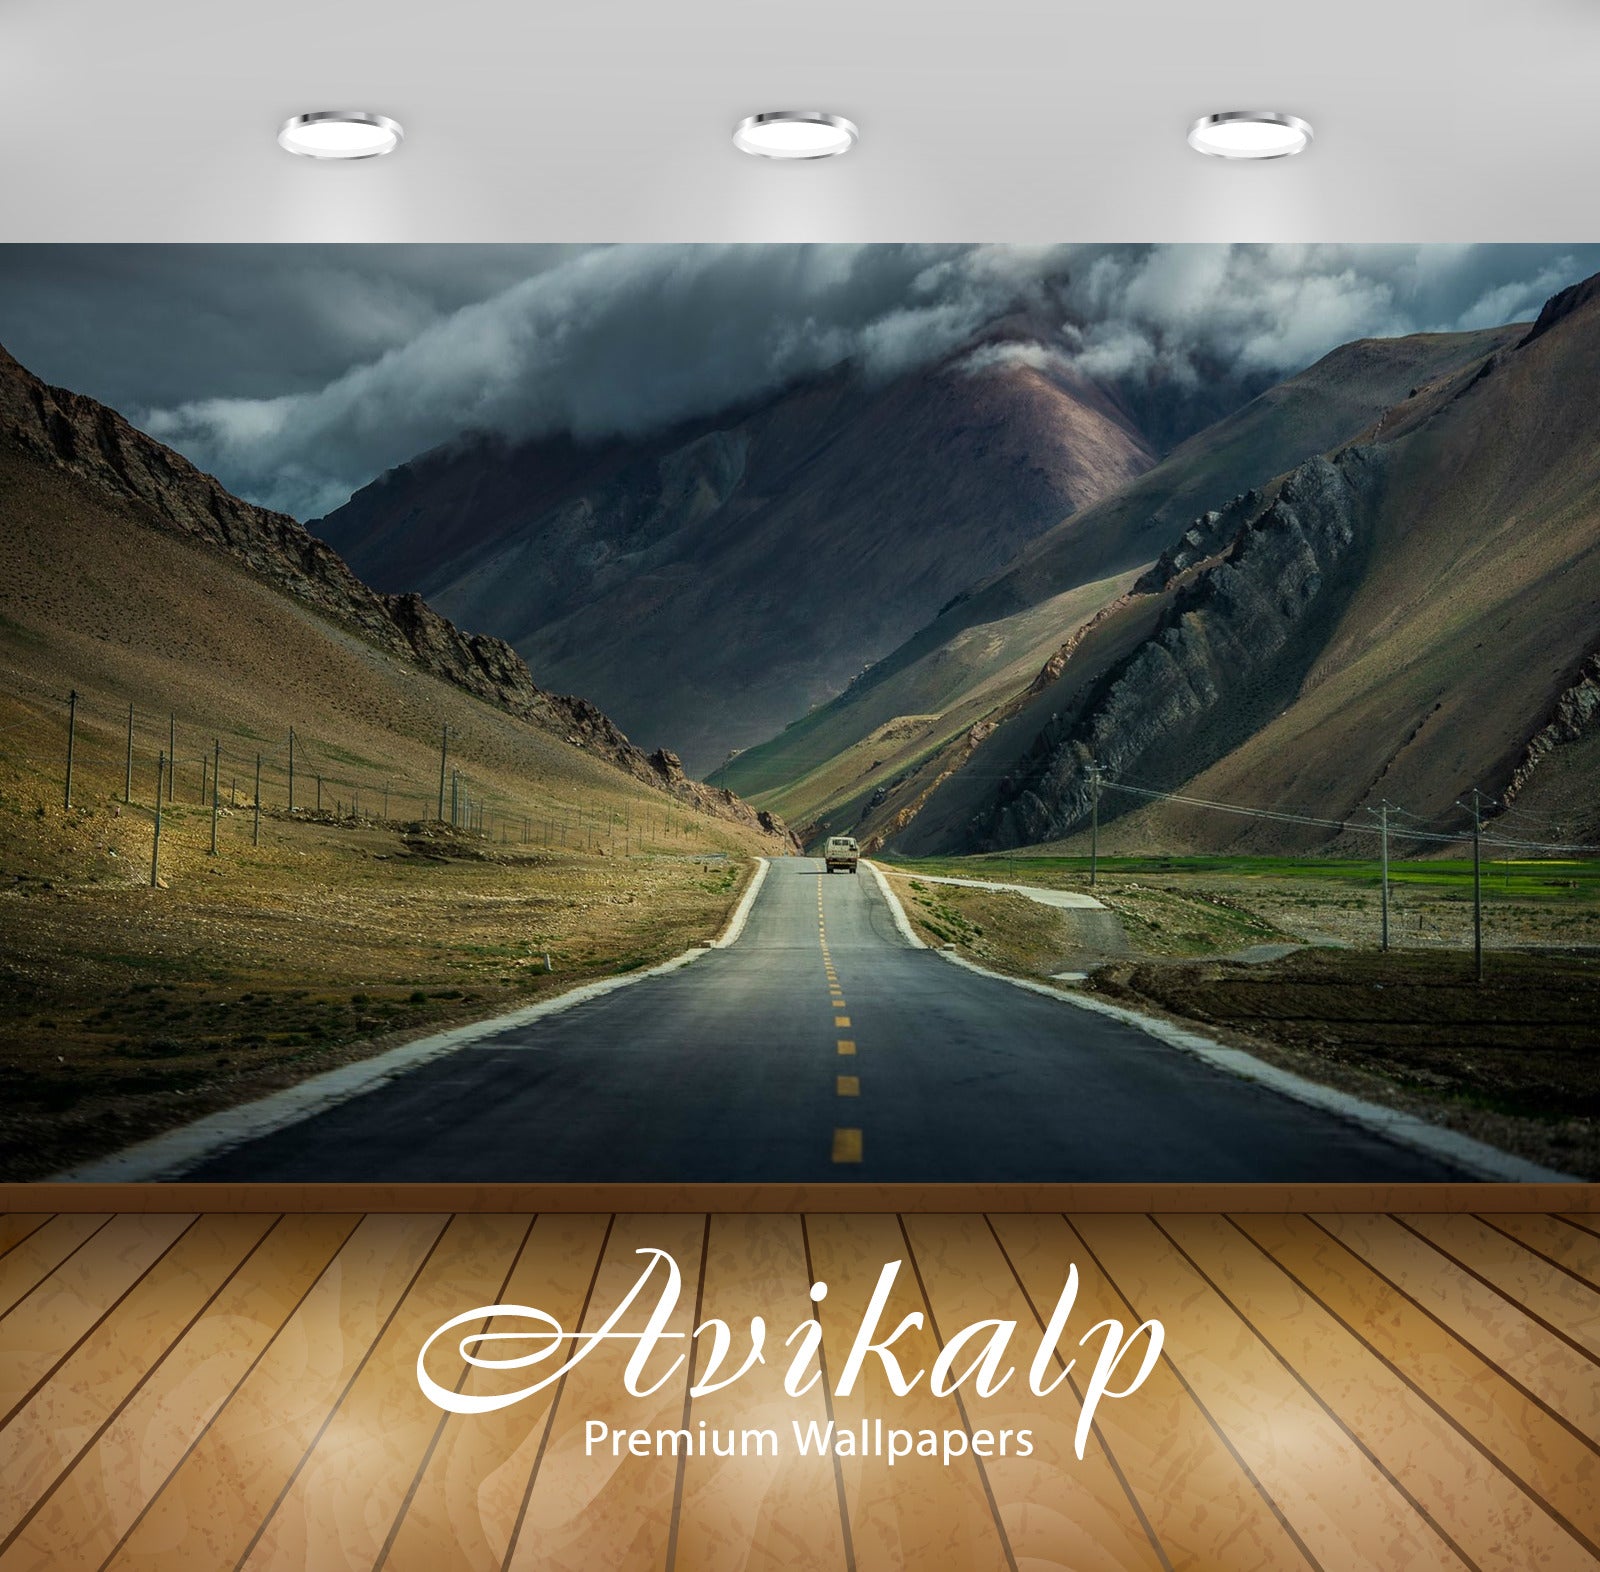 Avikalp Exclusive Awi1701 Beautiful Road Nature Scenery Full HD Wallpapers for Living room, Hall, Ki